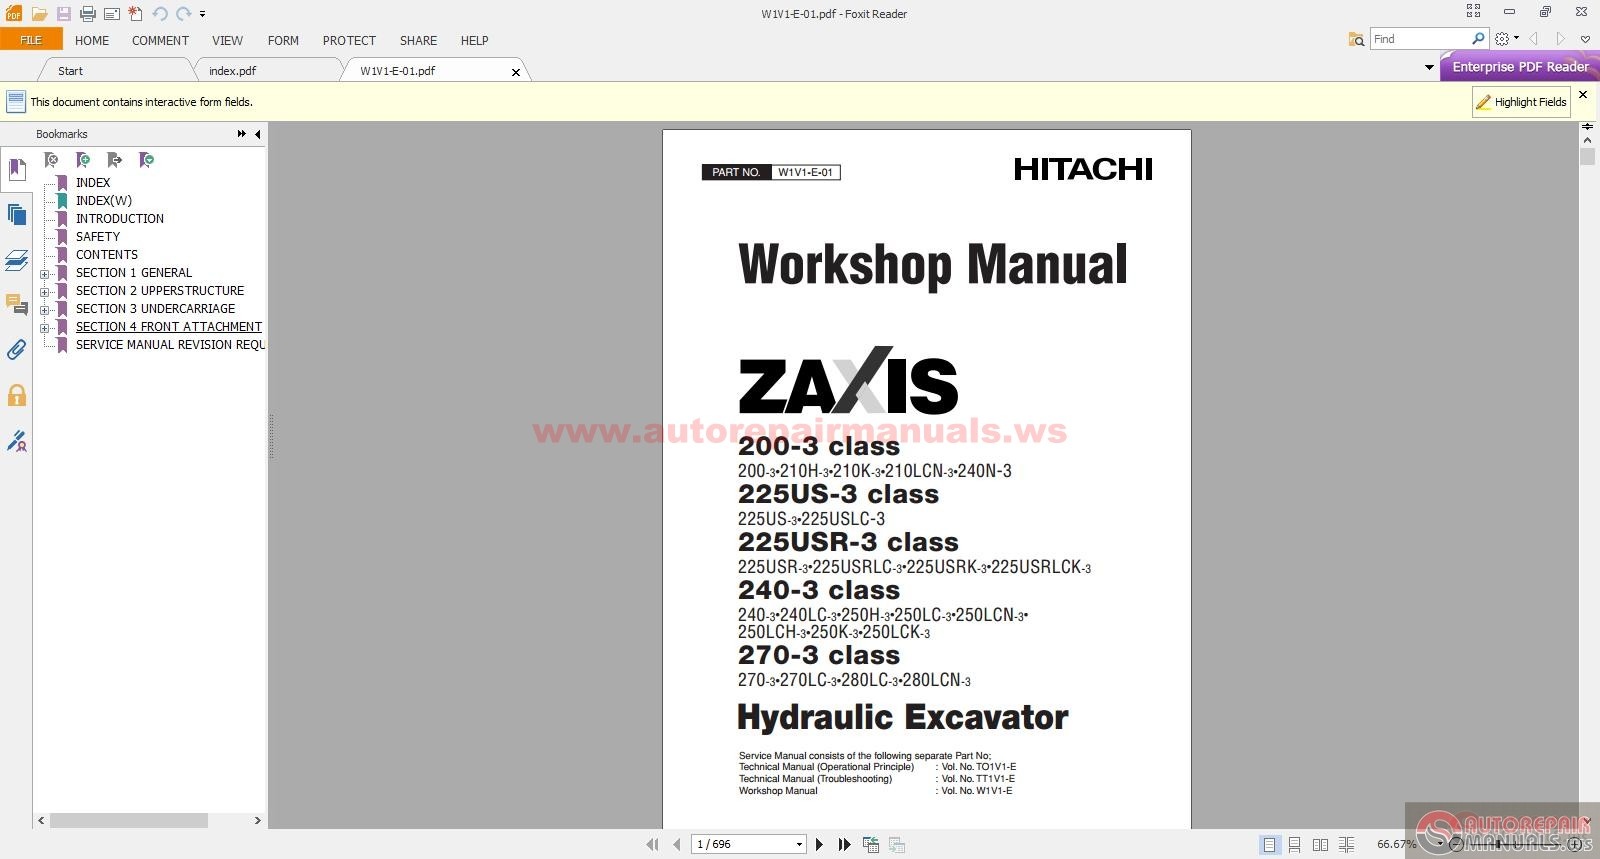 Hitachi Plasma Tv User Manuals Download - ManualsLib